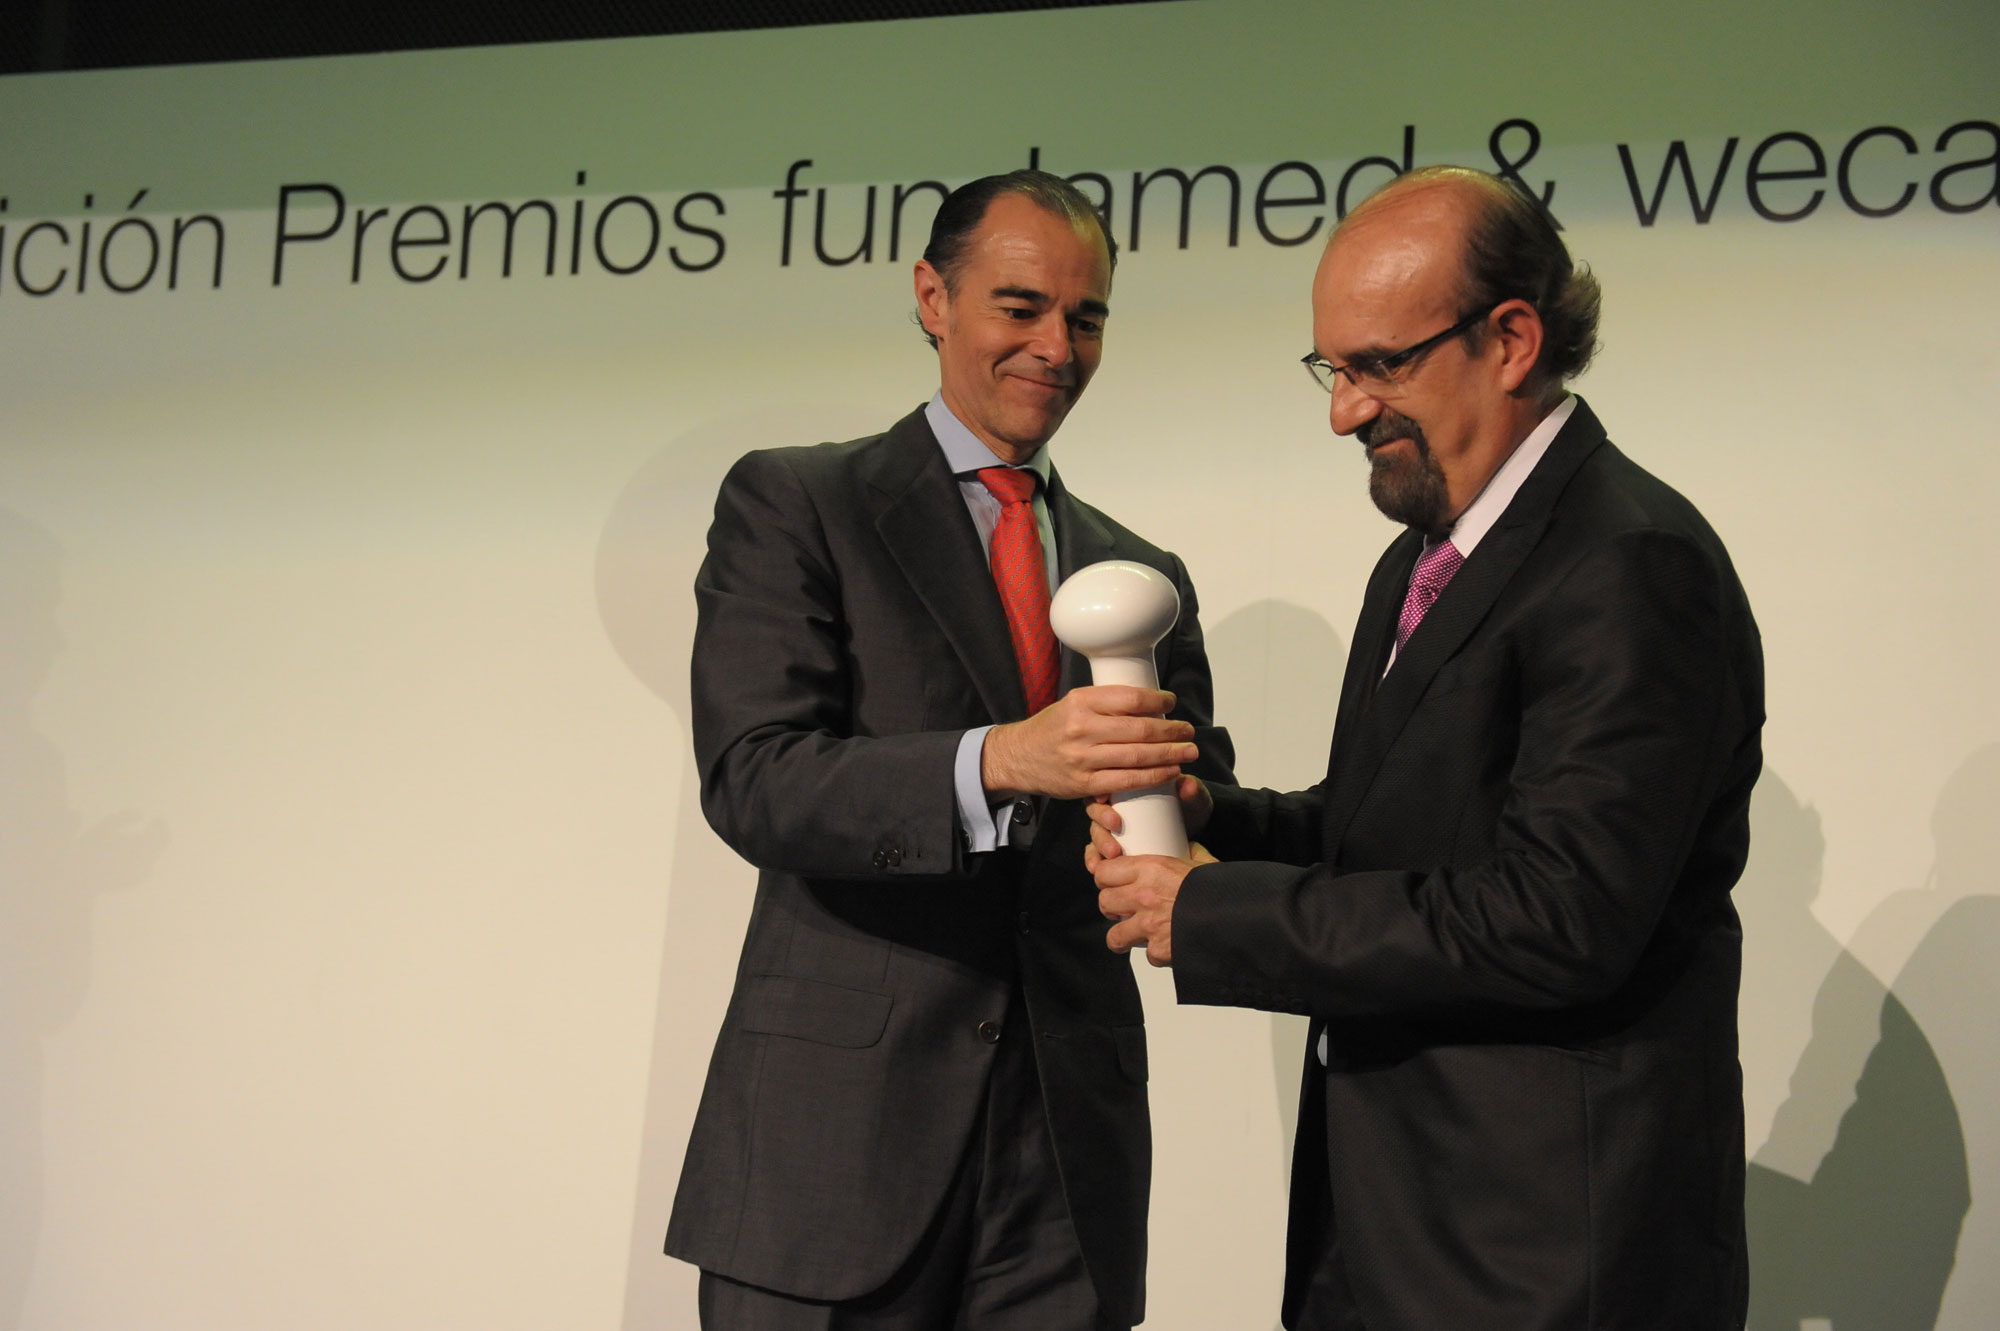 Galeria Premios Fundamed Ed. 2014